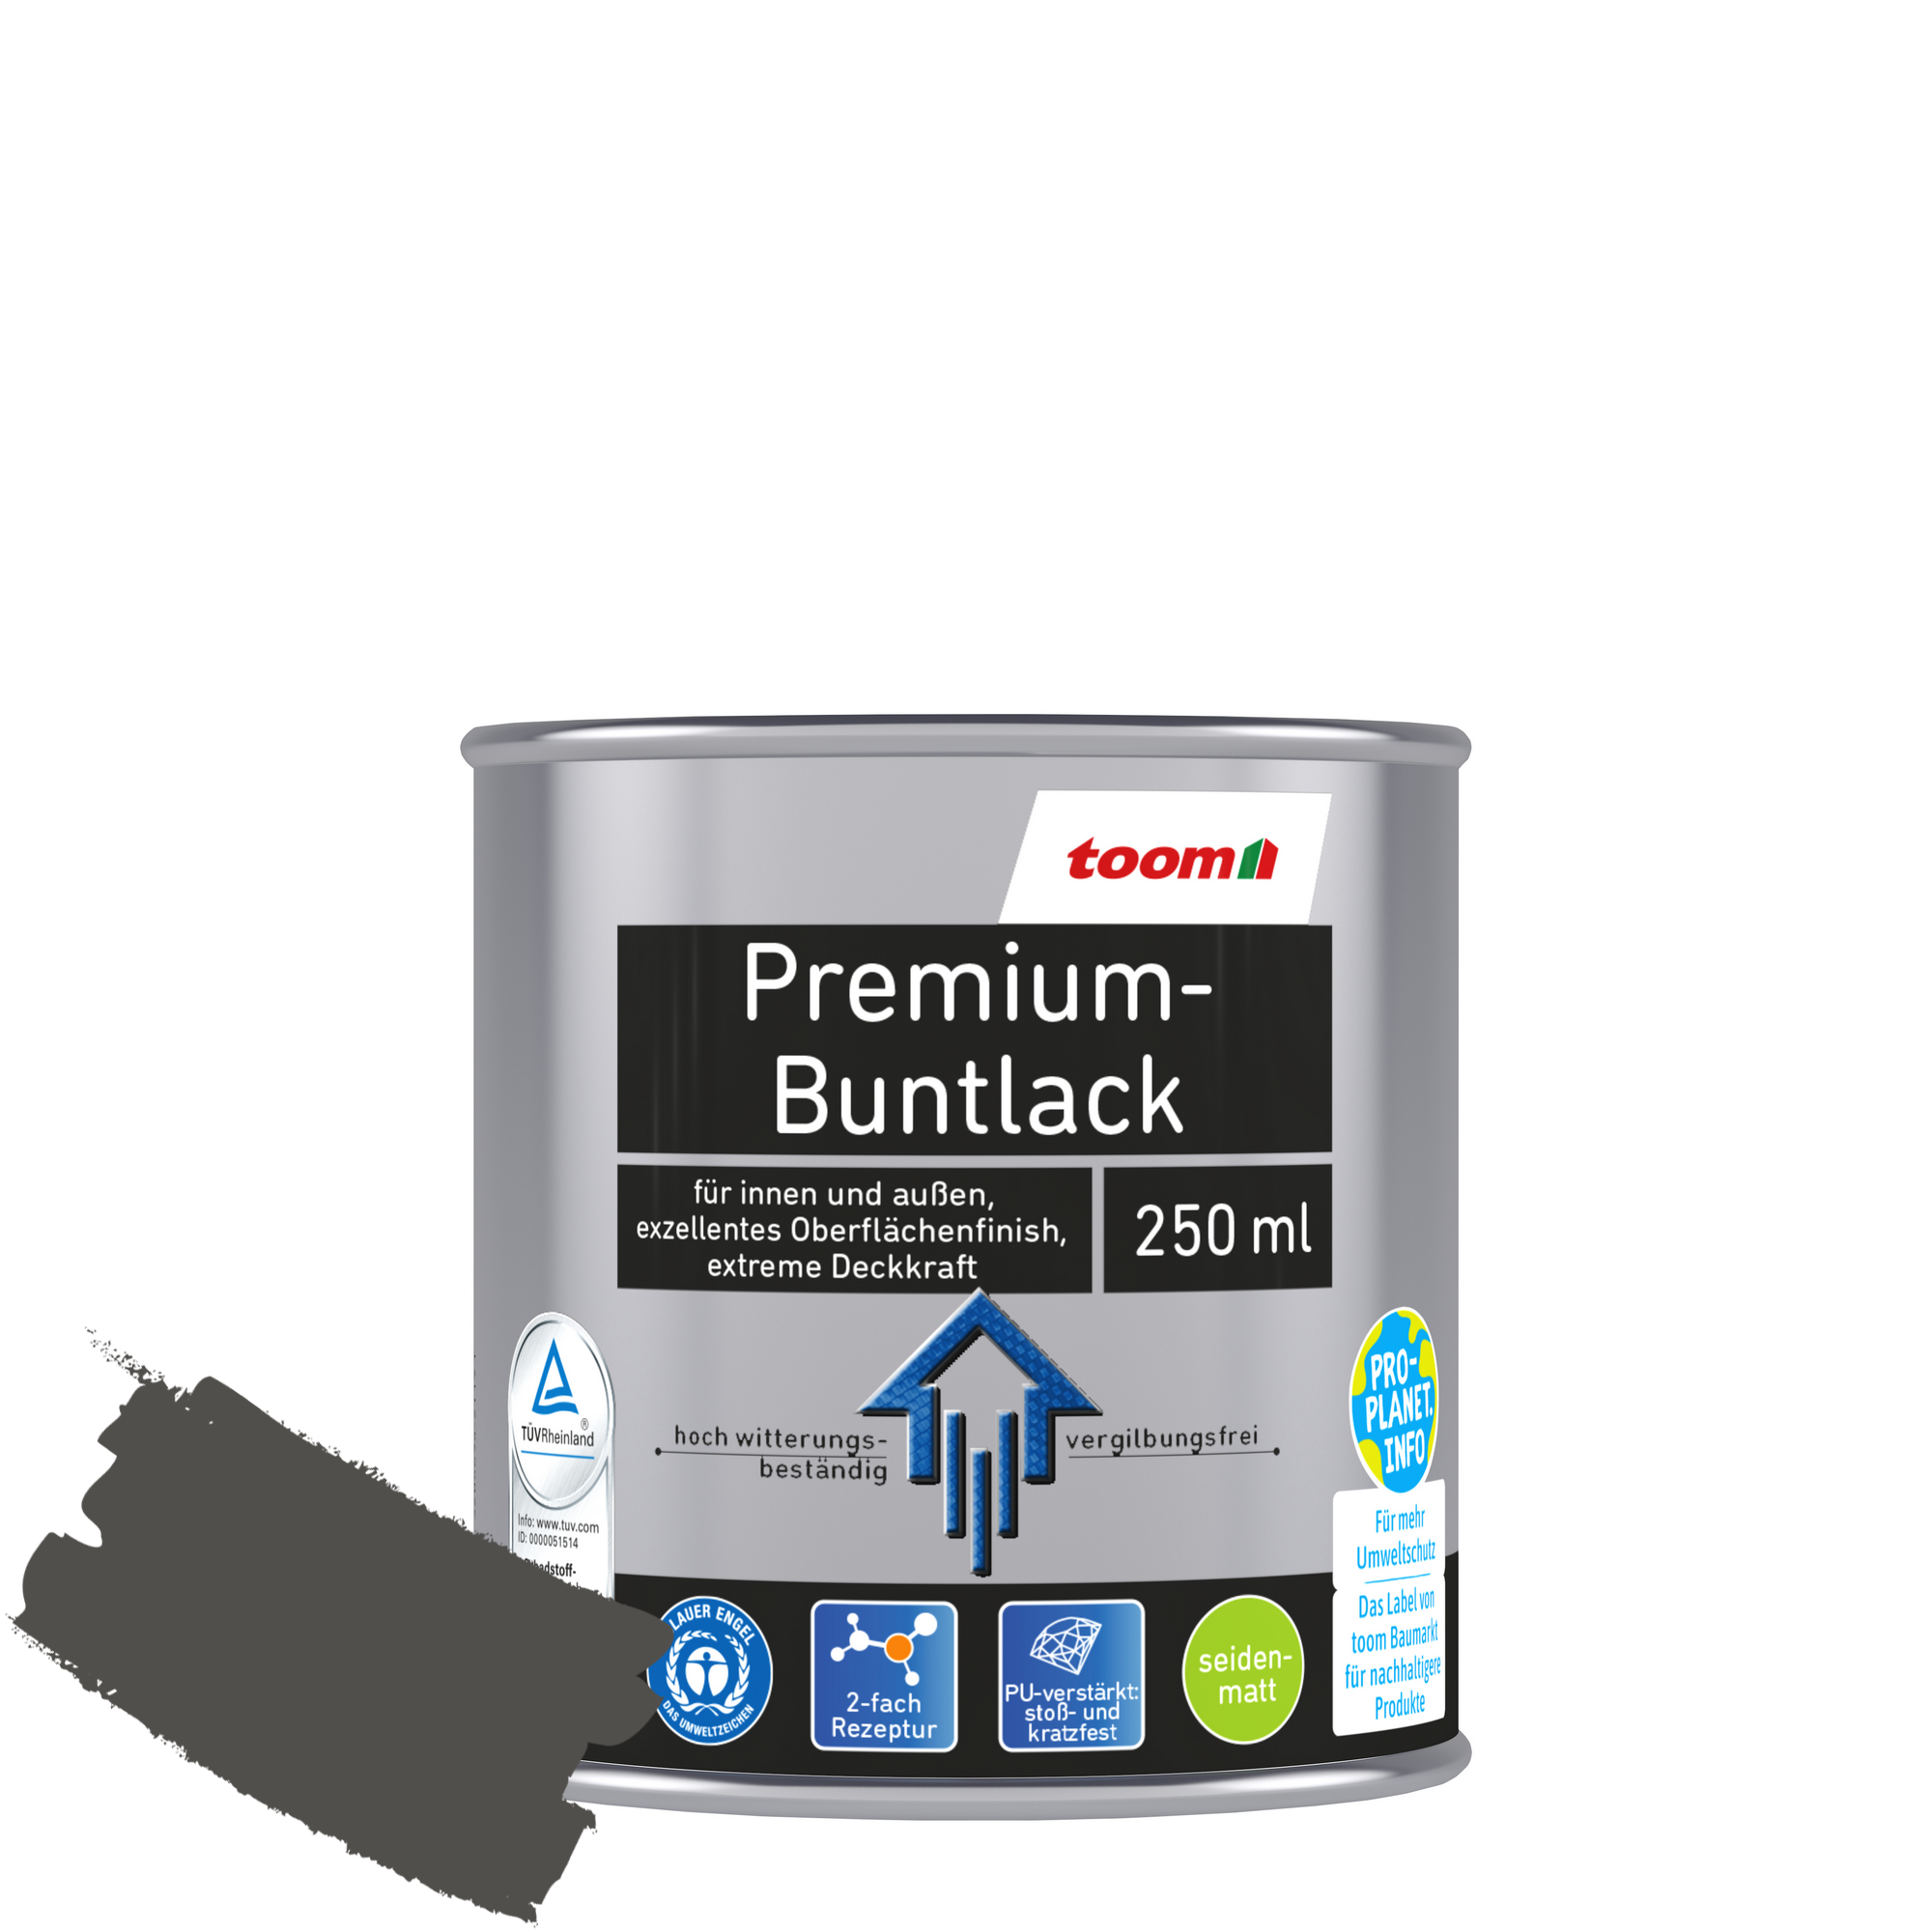 Premium-Buntlack silberfarben seidenmatt 250 ml + product picture